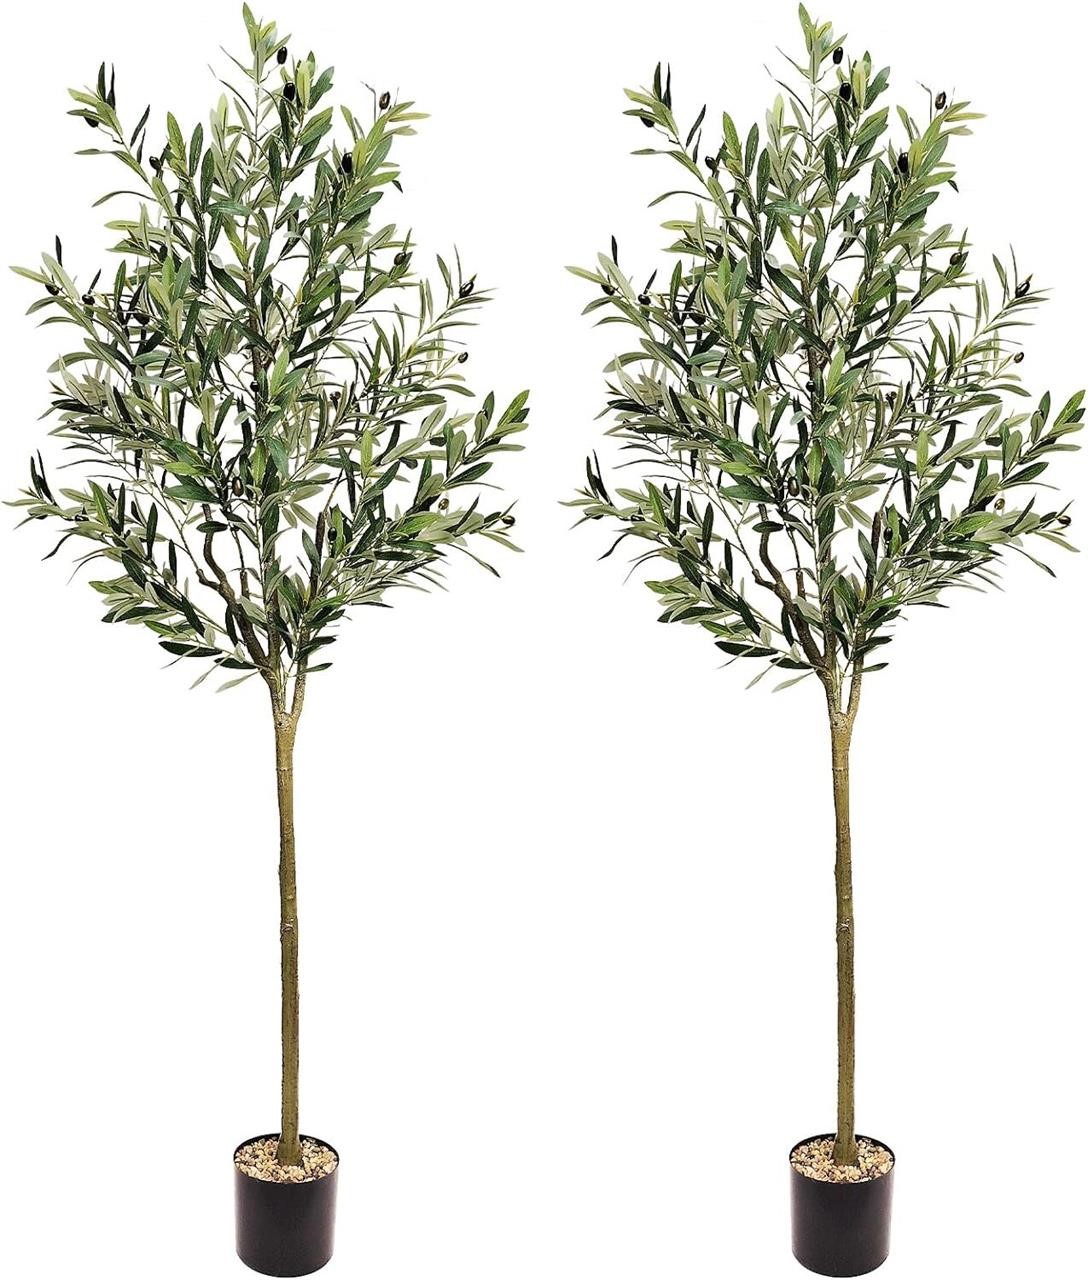 laverntard Artificial Olive Tree 2pk 6ft